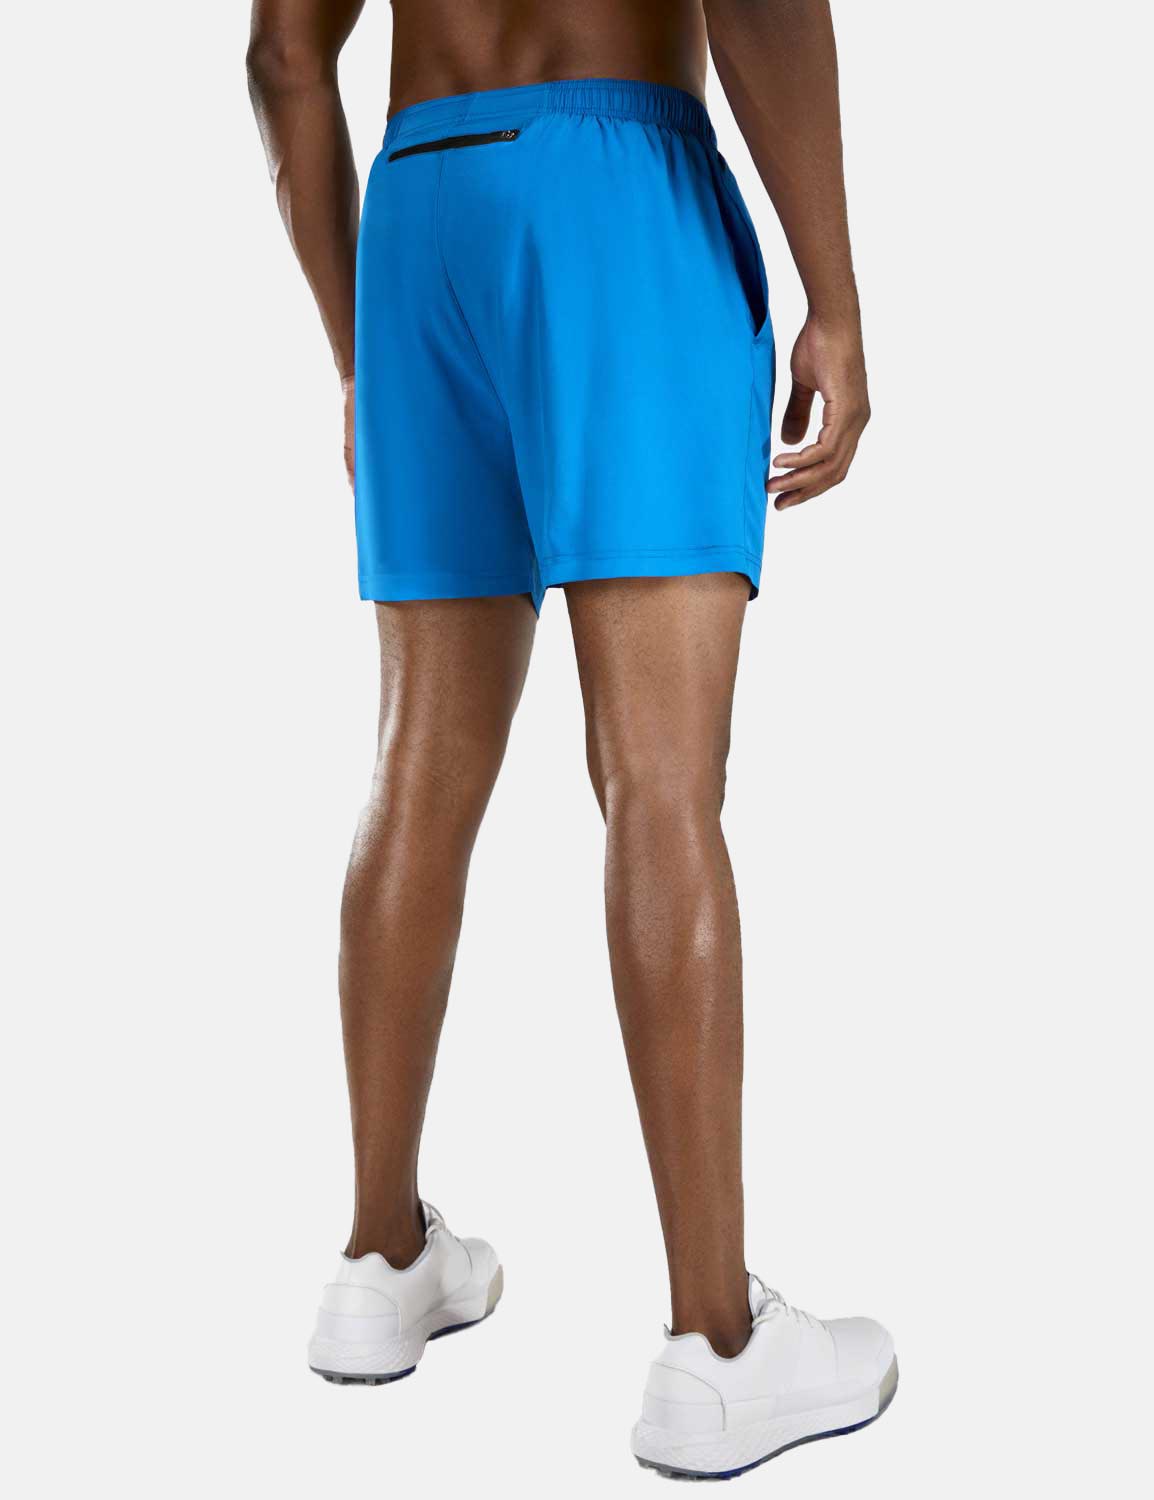 Baleaf Men's 5'' Light-Weight Quick Dry Fully Lined Shorts abd215 Light Blue Back